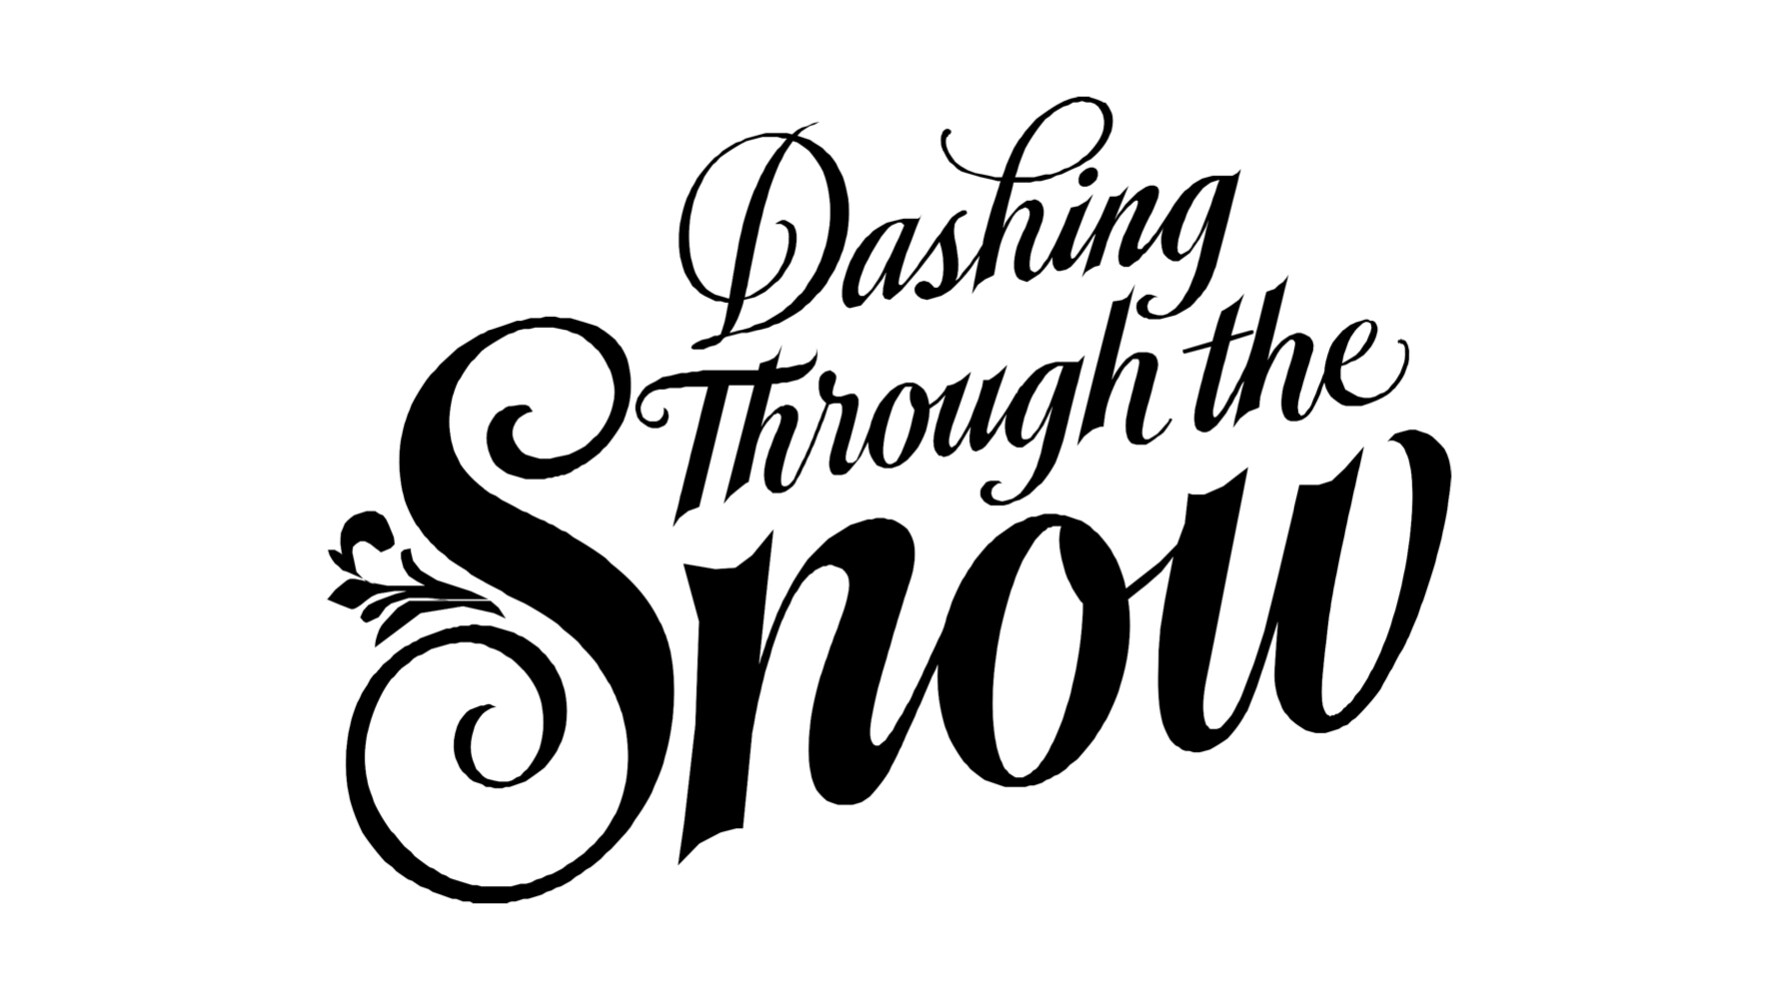 “Dashing Through The Snow” Starring Lil Rel Howery, Chris “Ludacris” Bridges, And Teyonah Parris To Debut November 17, 2023, Exclusively On Disney+